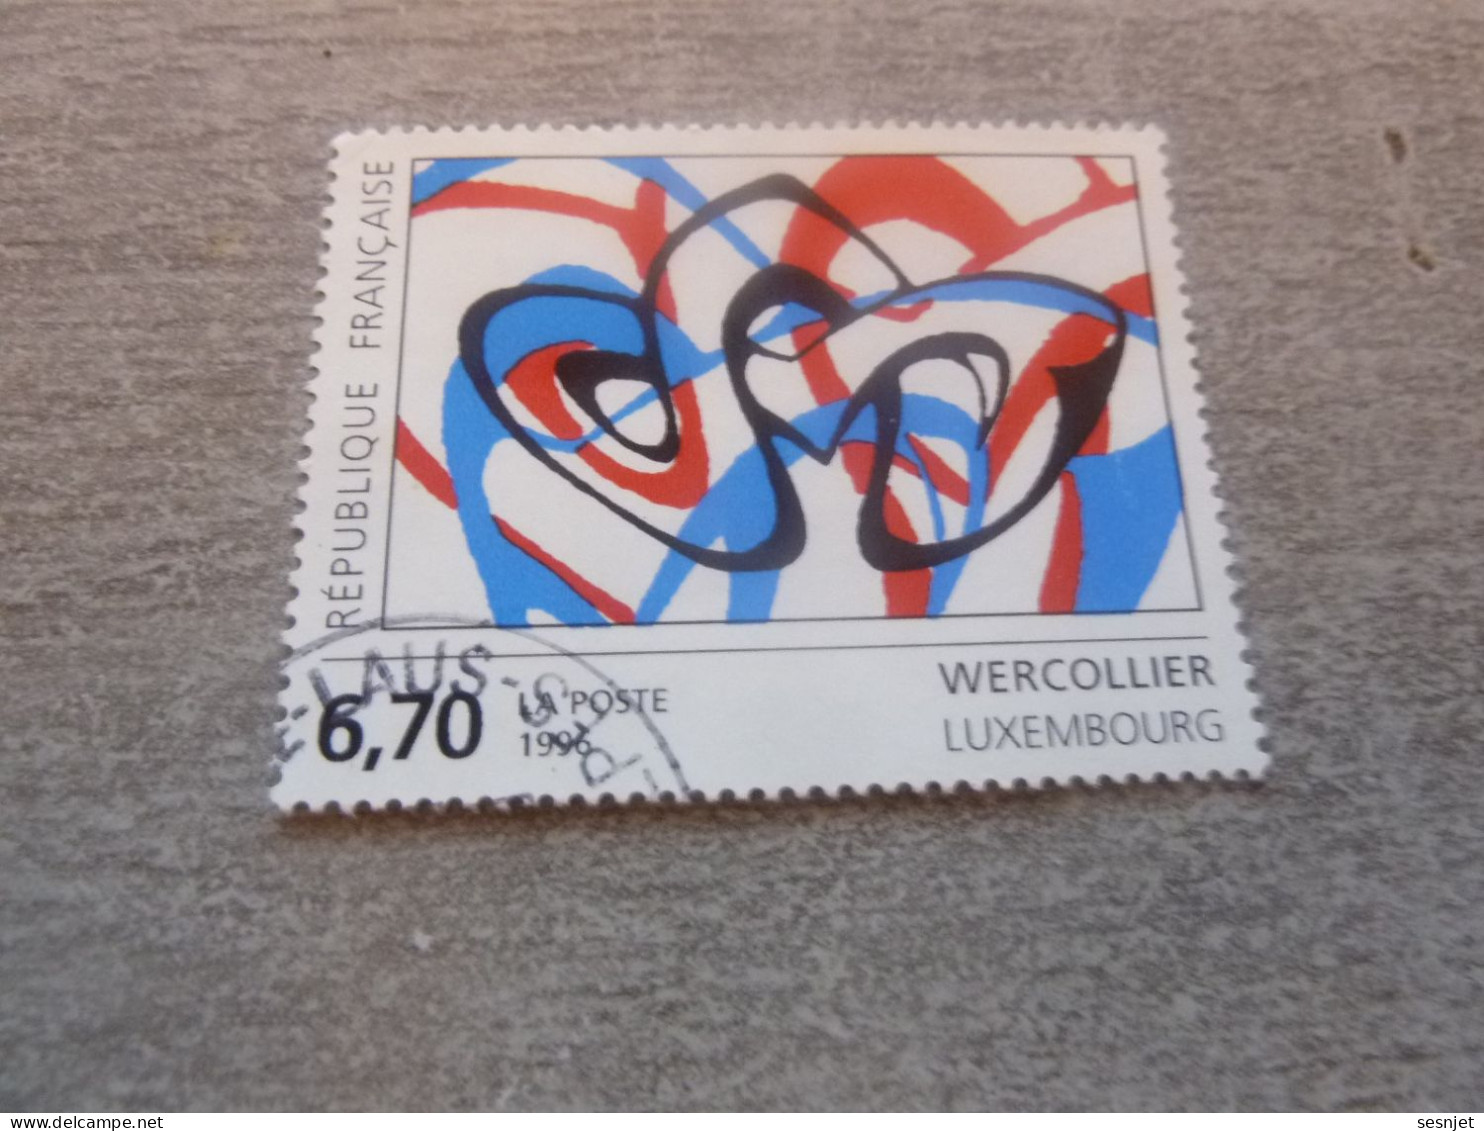 Lucien Wercollier (1908-2002) Luxembourg - 6f.70 - Yt 2986 - Noir, Rouge Et Bleu - Oblitéré - Année 1996 - - Gebraucht